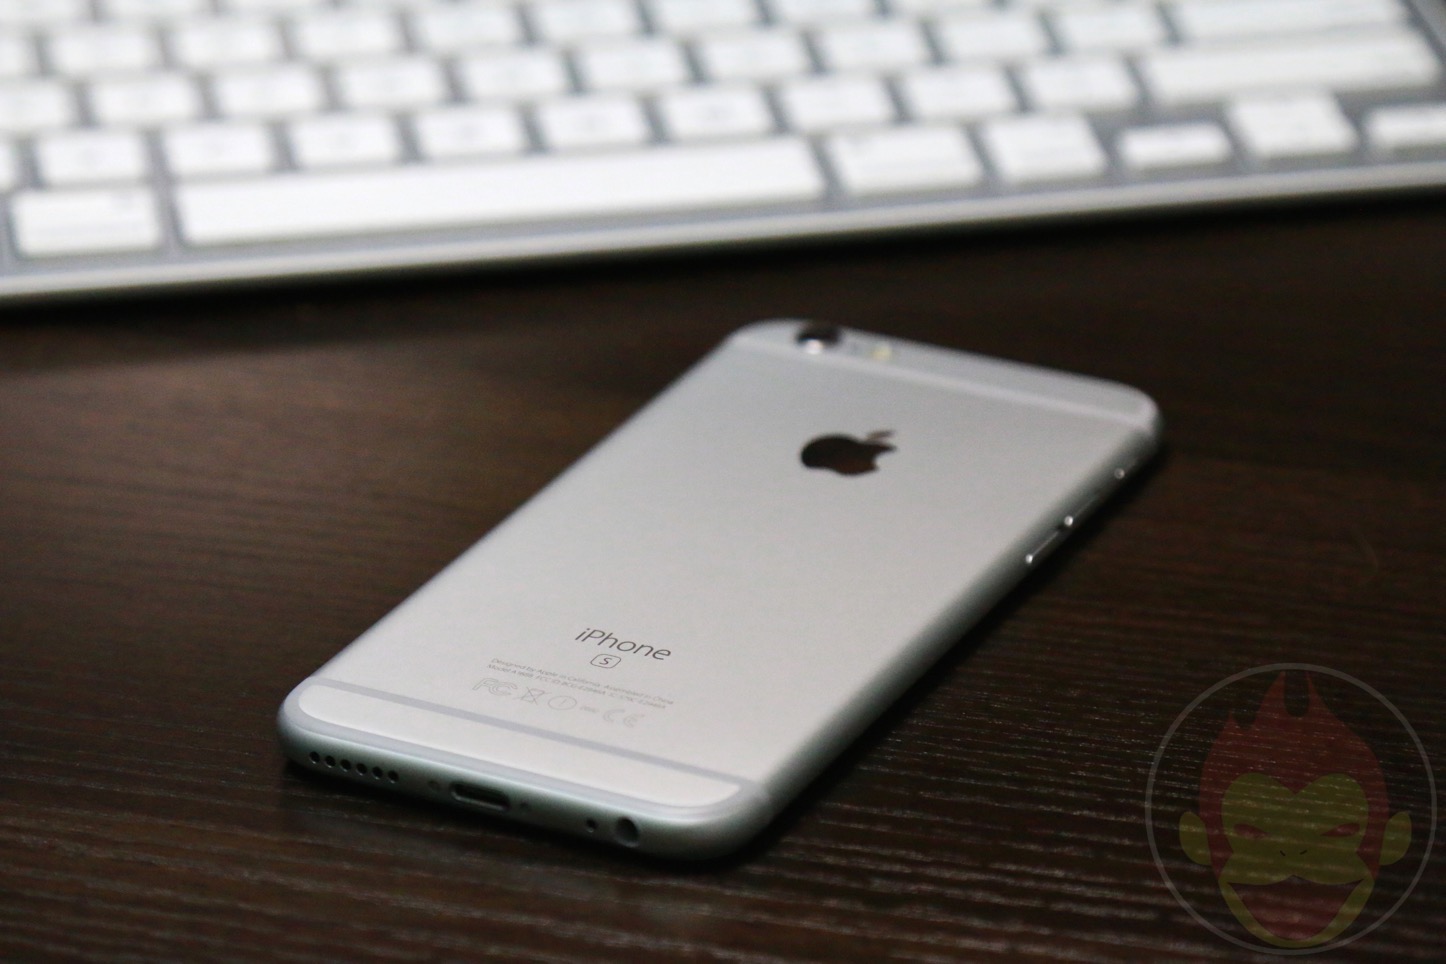 iPhone-6s-In-Depth-Review-16.jpg